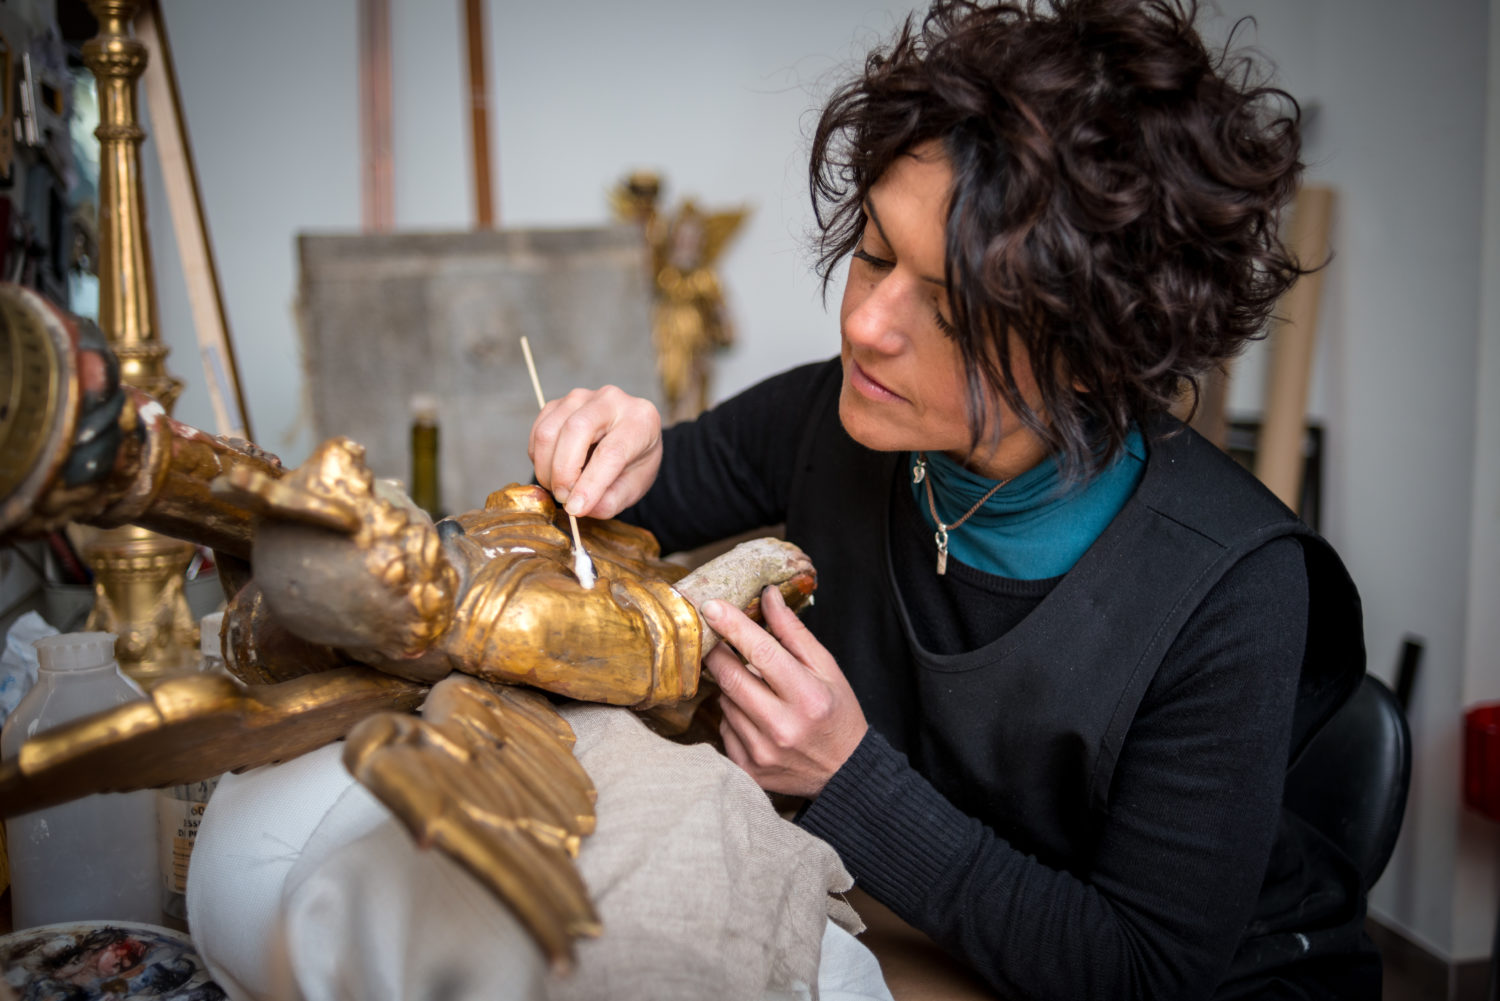 Restorer and framer laboratory craftswomen: Restoring antique golden angel statue